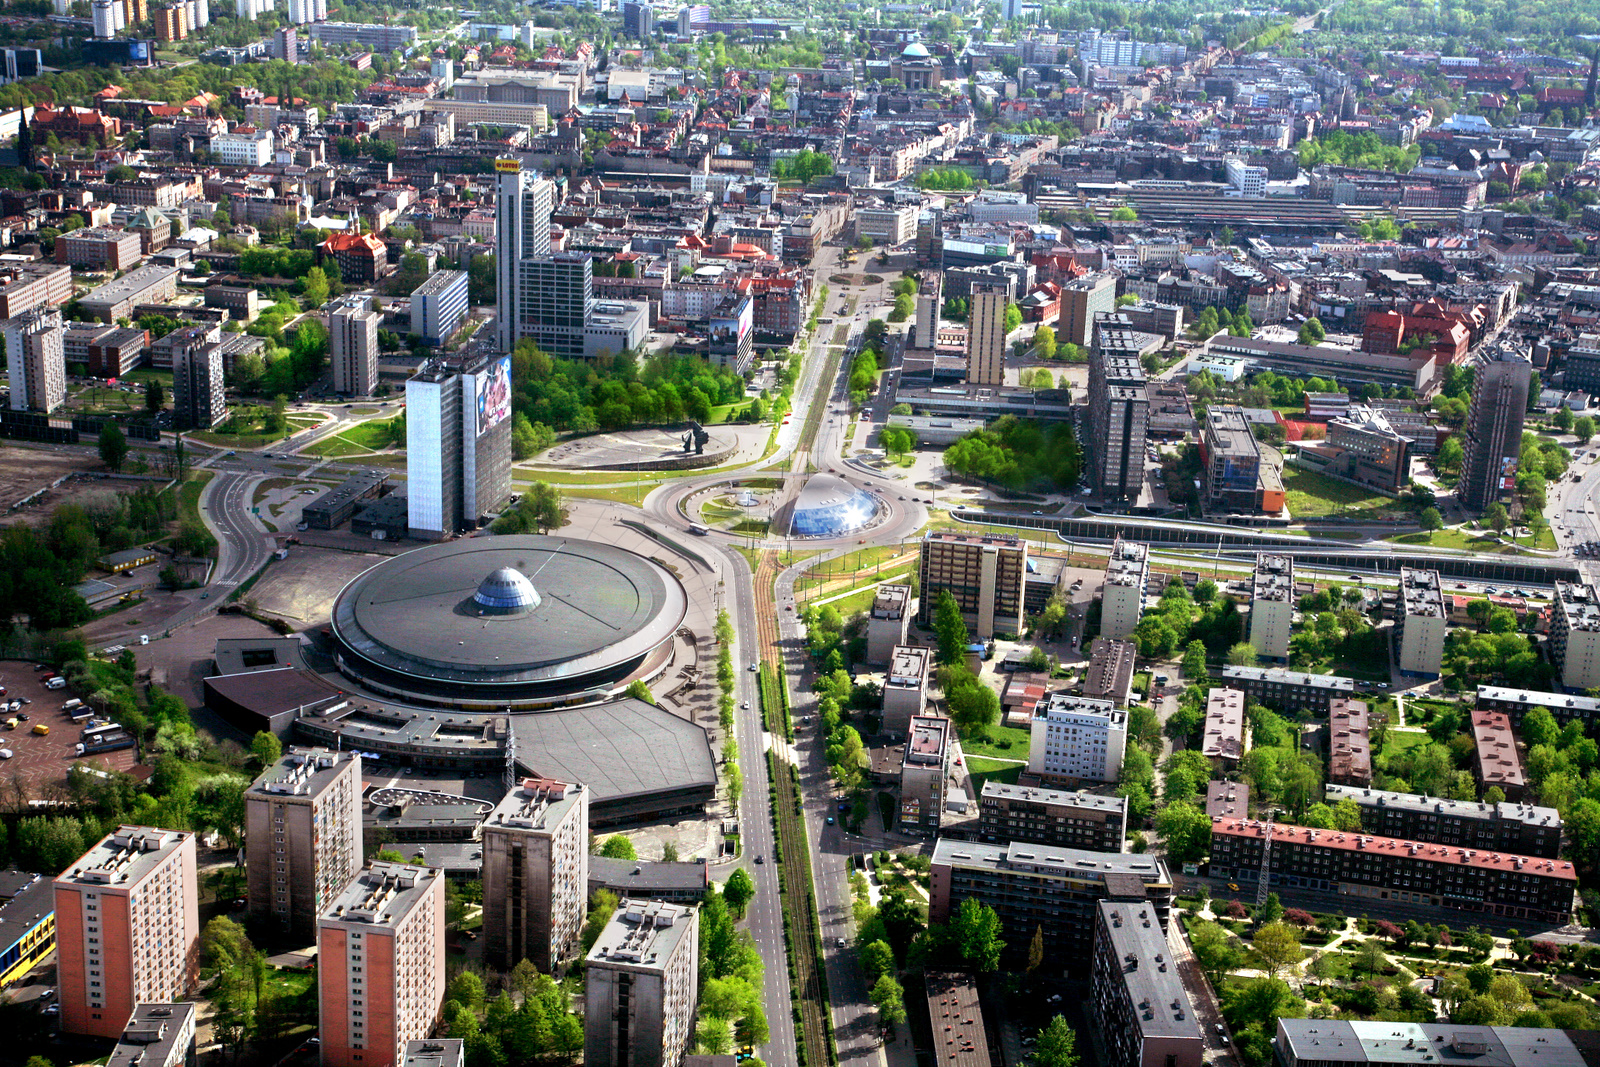 Katowice from a bird’s eye view. Source: Wikipedia